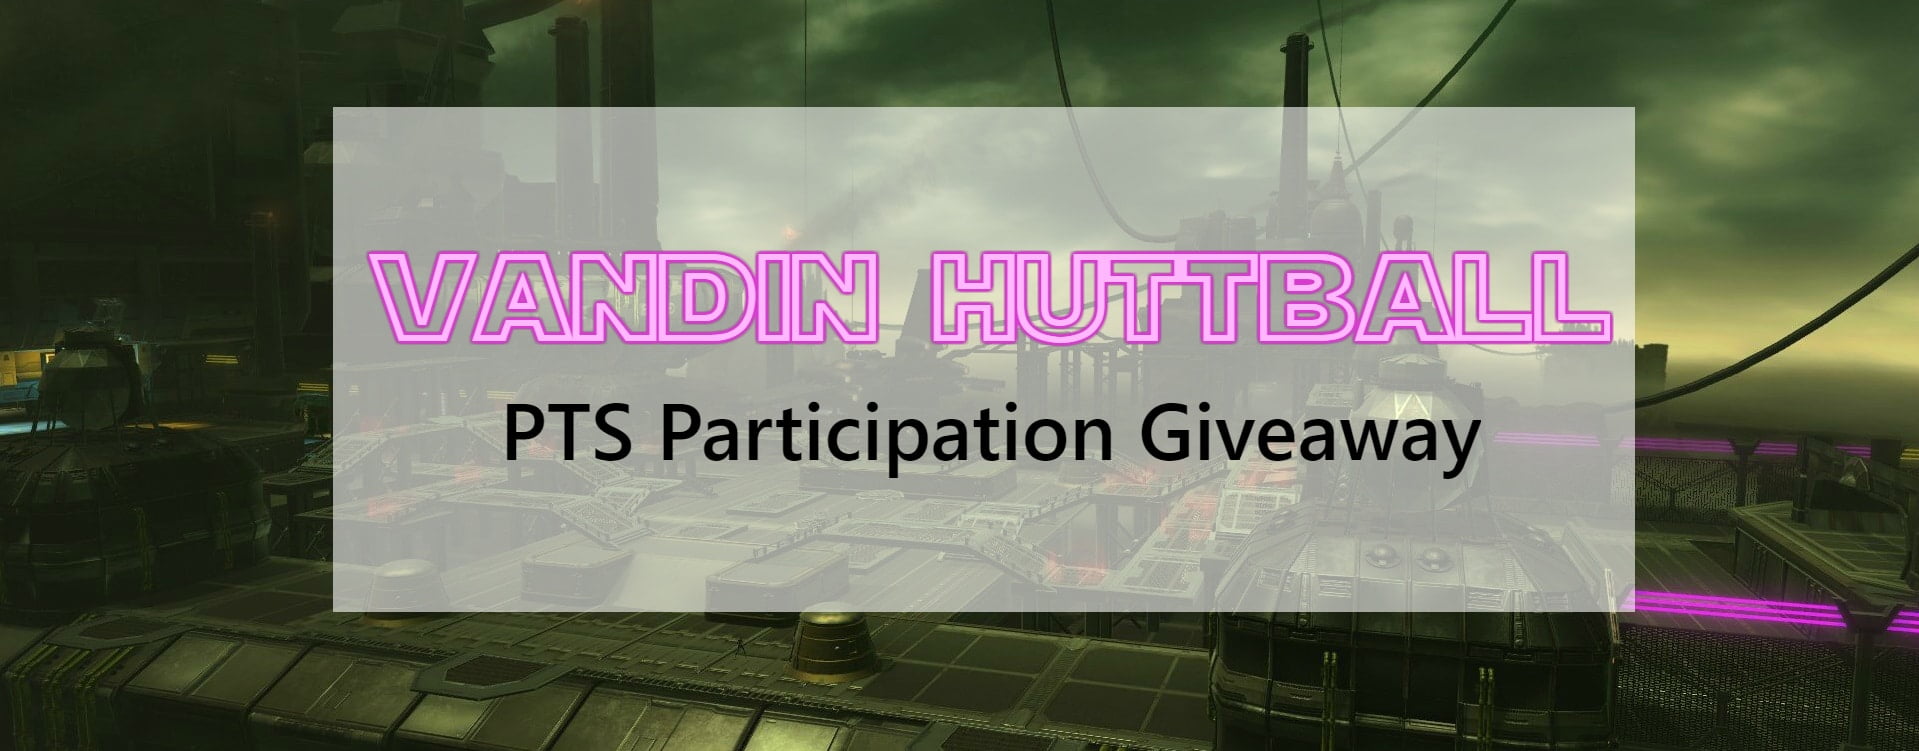 Vandin Huttball PTS Participation Giveaway